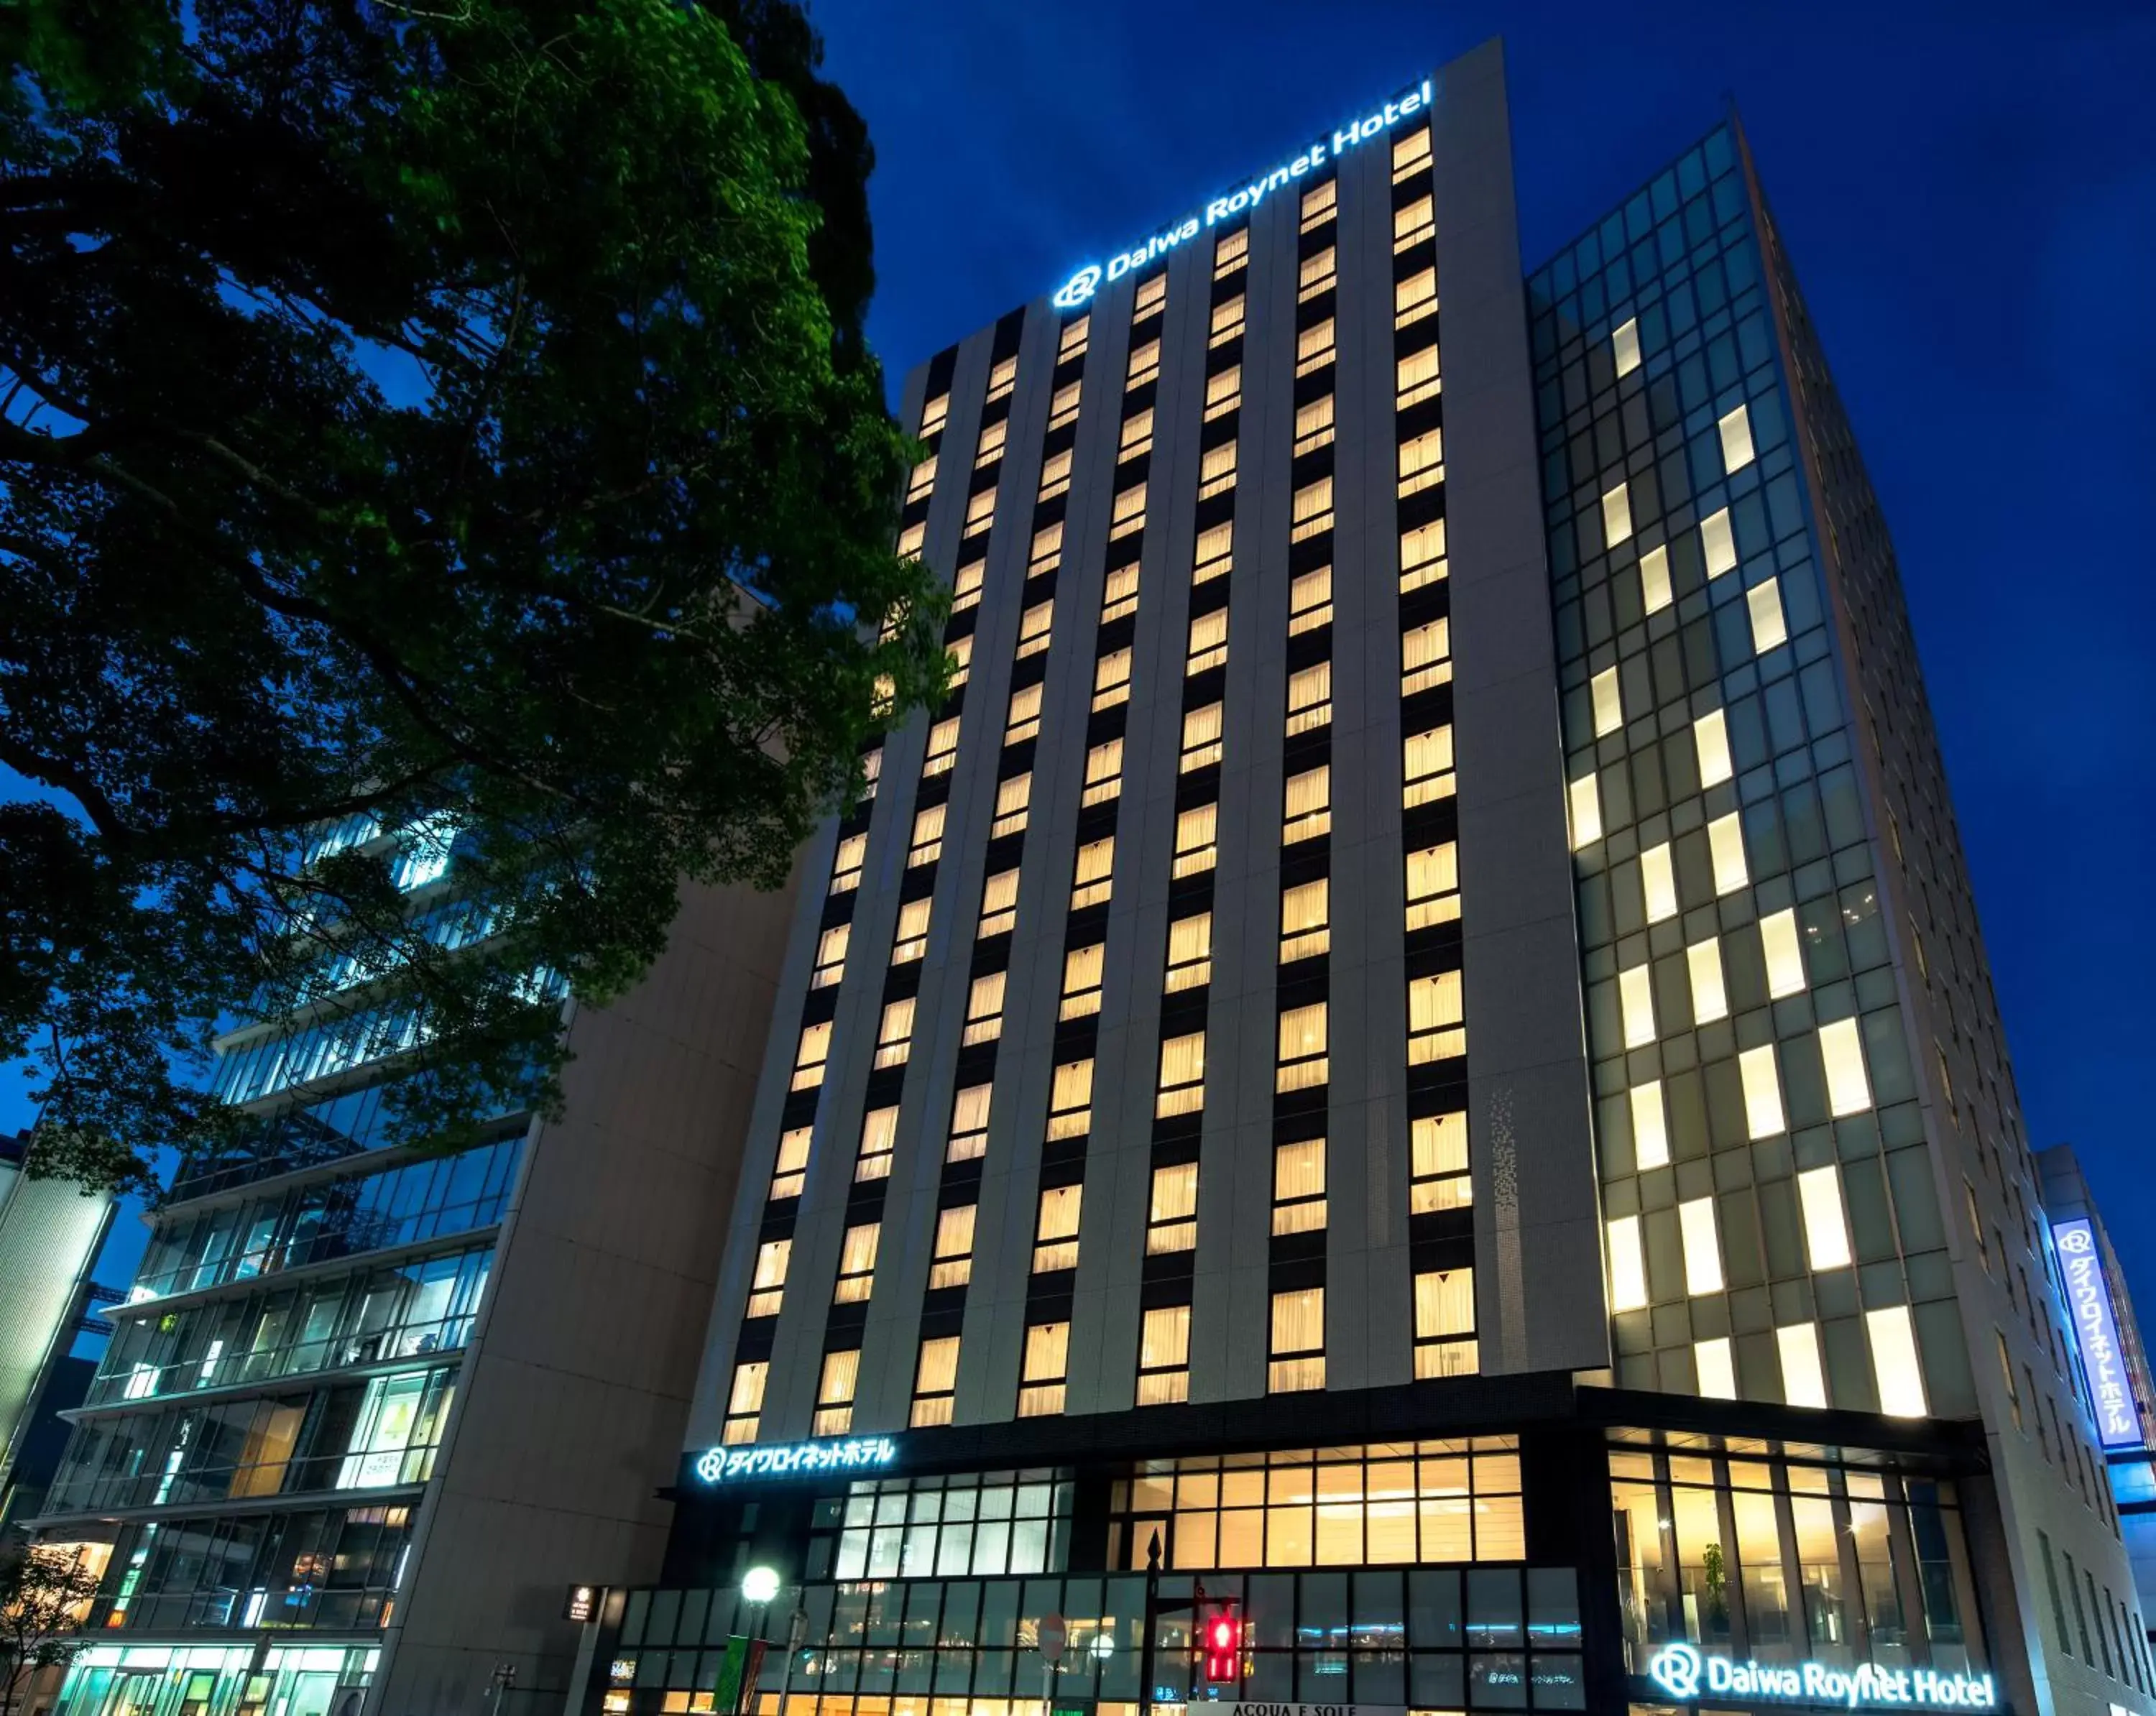 Property Building in Daiwa Roynet Hotel Chiba-chuo